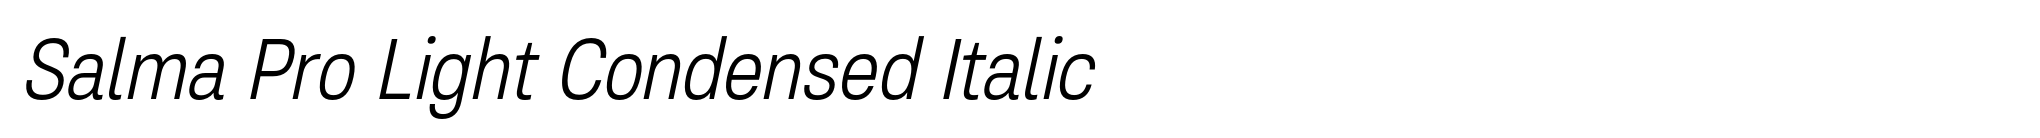 Salma Pro Light Condensed Italic image